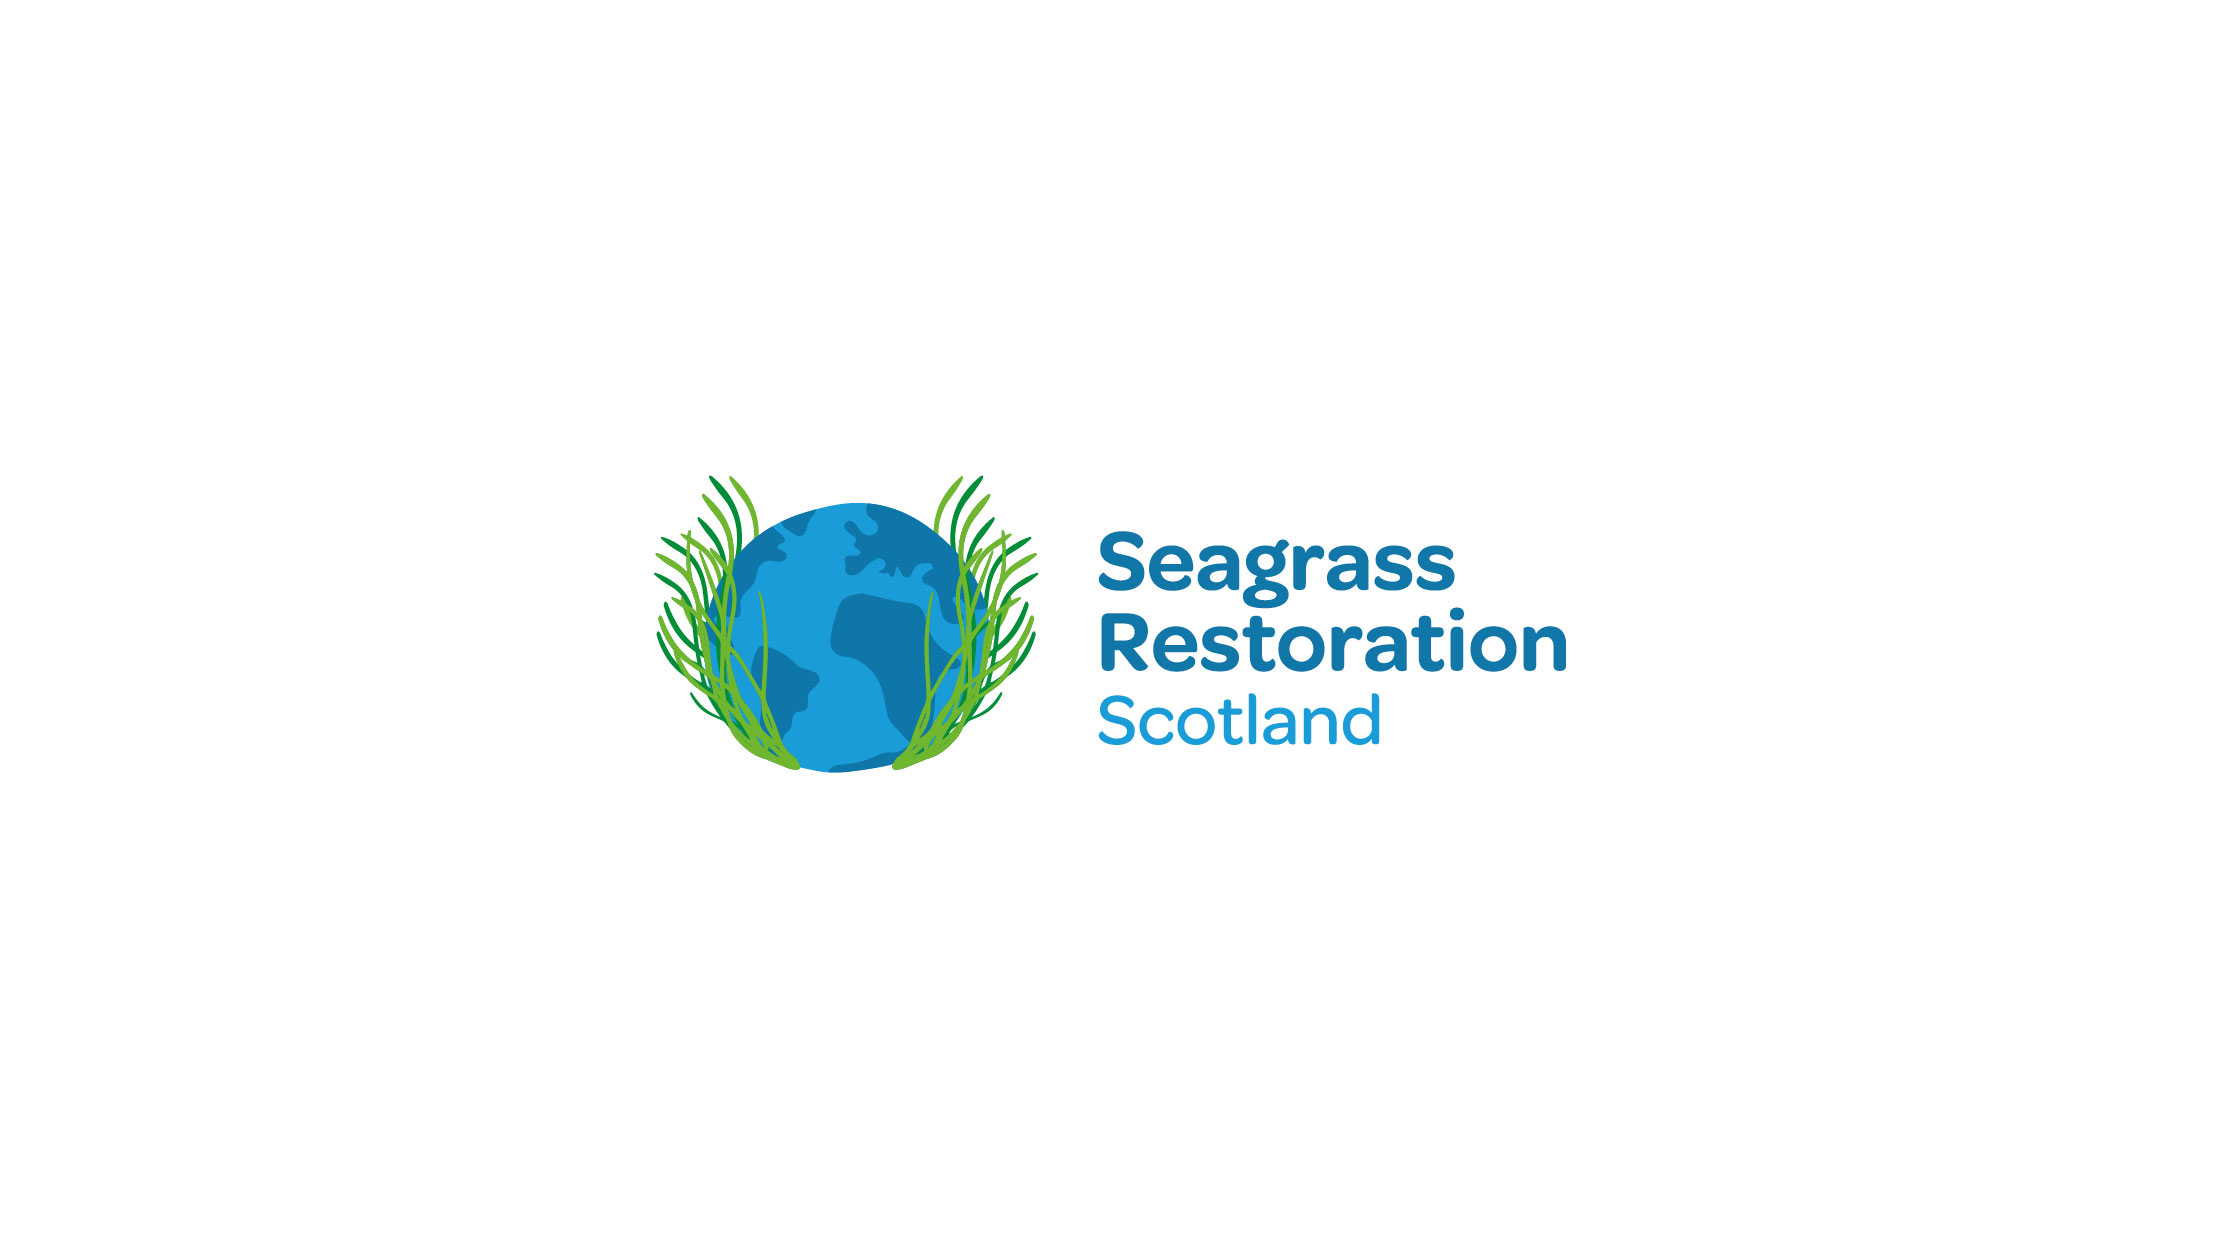 Seagrass Restoration Scotland logo design